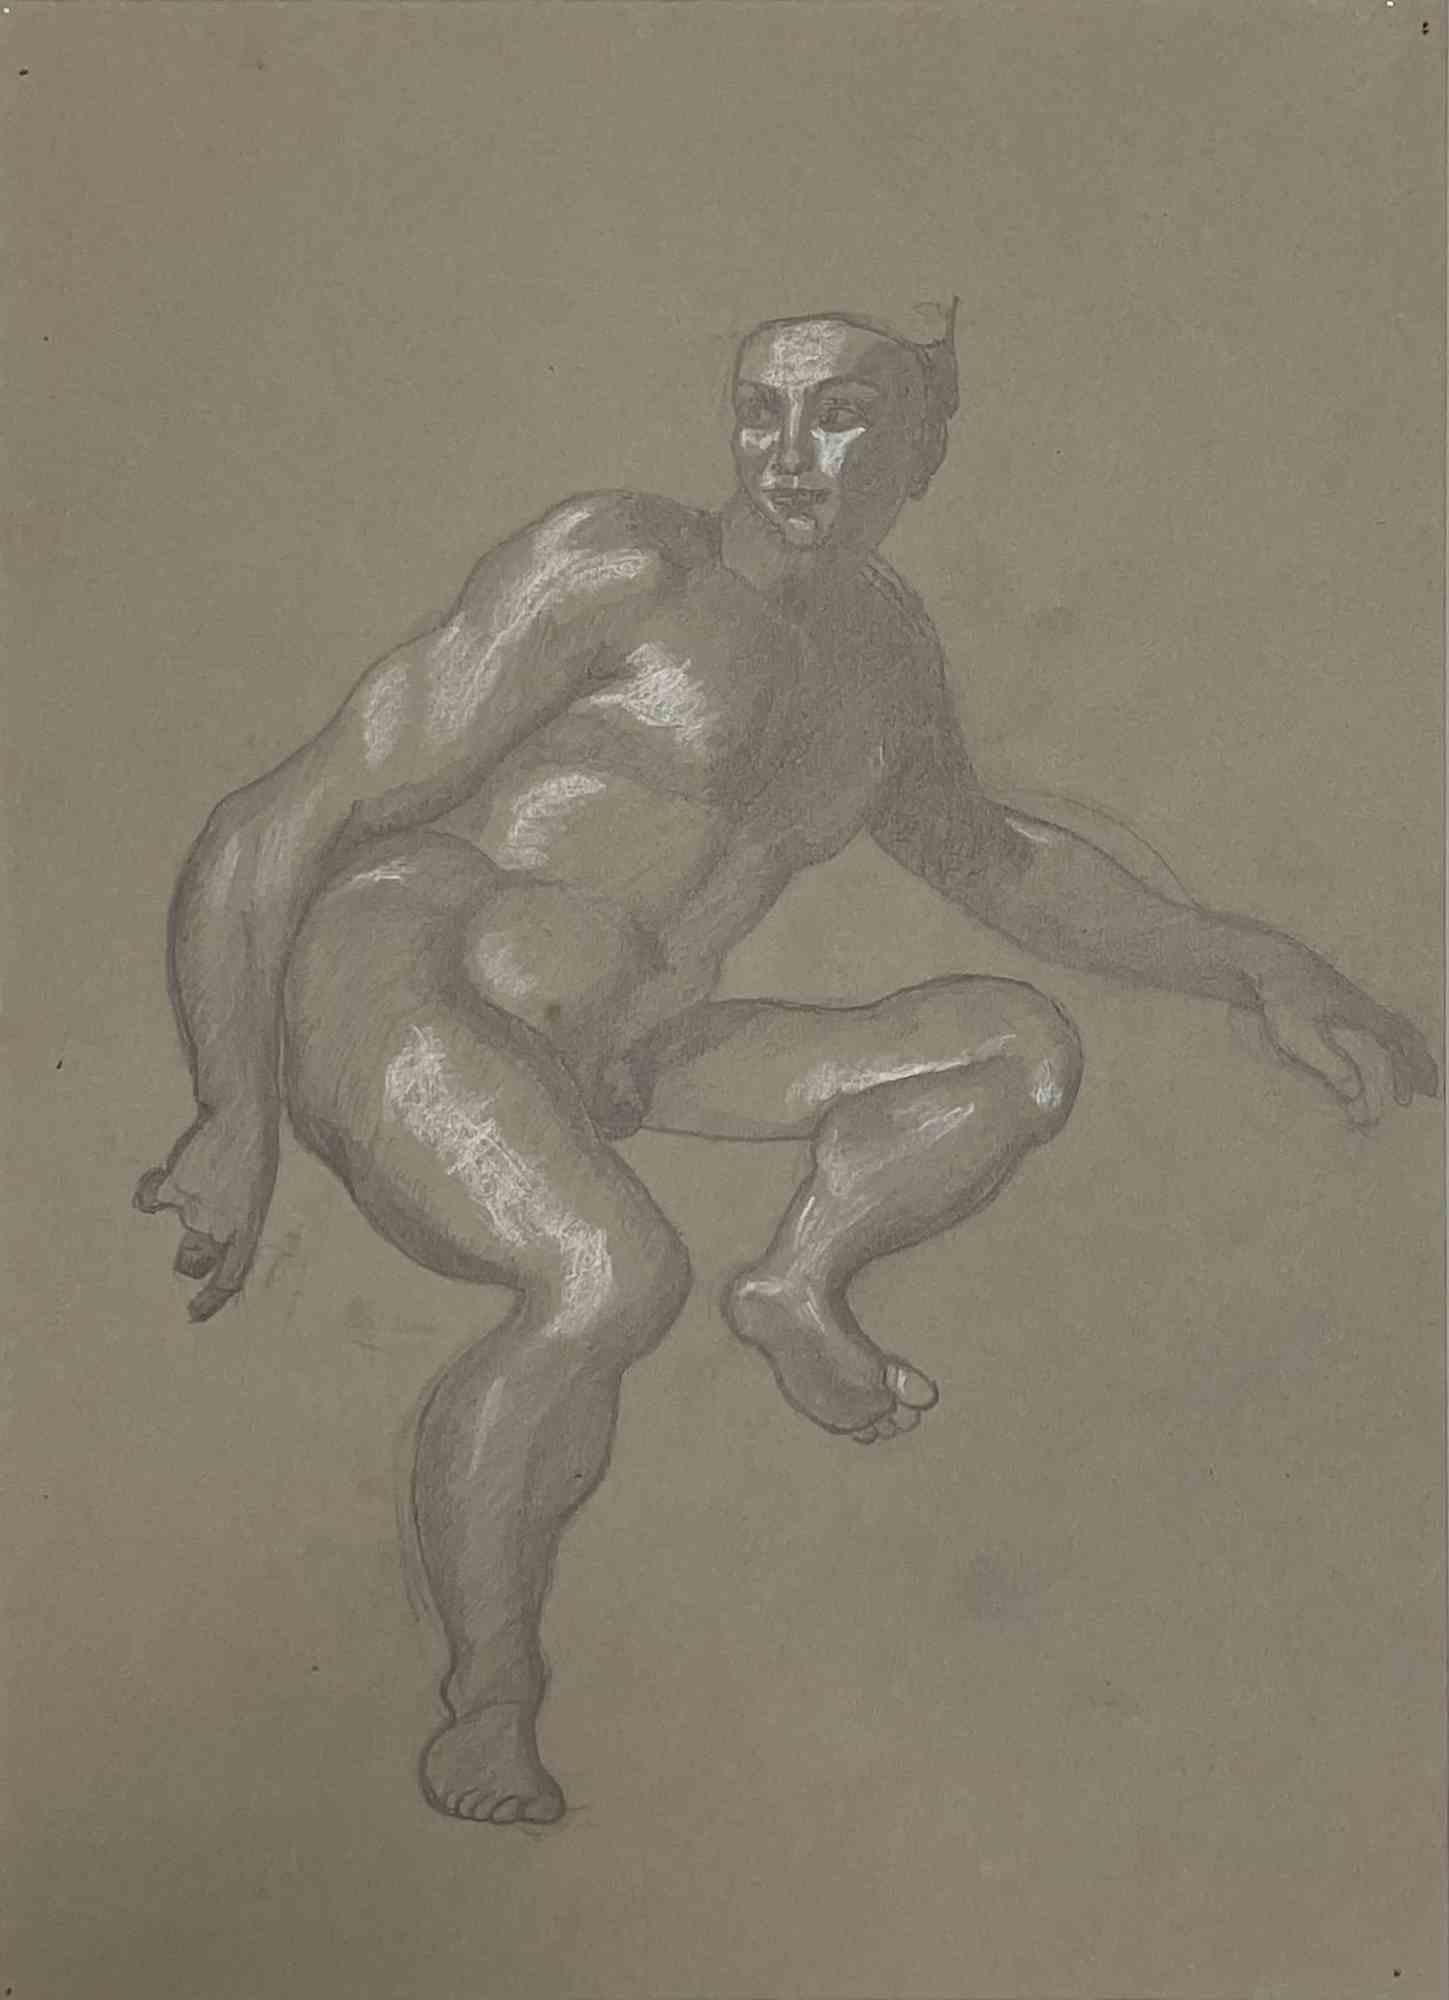 Nude after  Michelangelo is an artwork realized by Luigi Russolo in 1933/34.

Mixed Media on Paper.

cm. 33x24,3. 

Good conditions!

Luigi Carlo Filippo Russolo (Portogruaro, 30 April 1885 - Laveno-Mombello, 4 February 1947) was an Italian